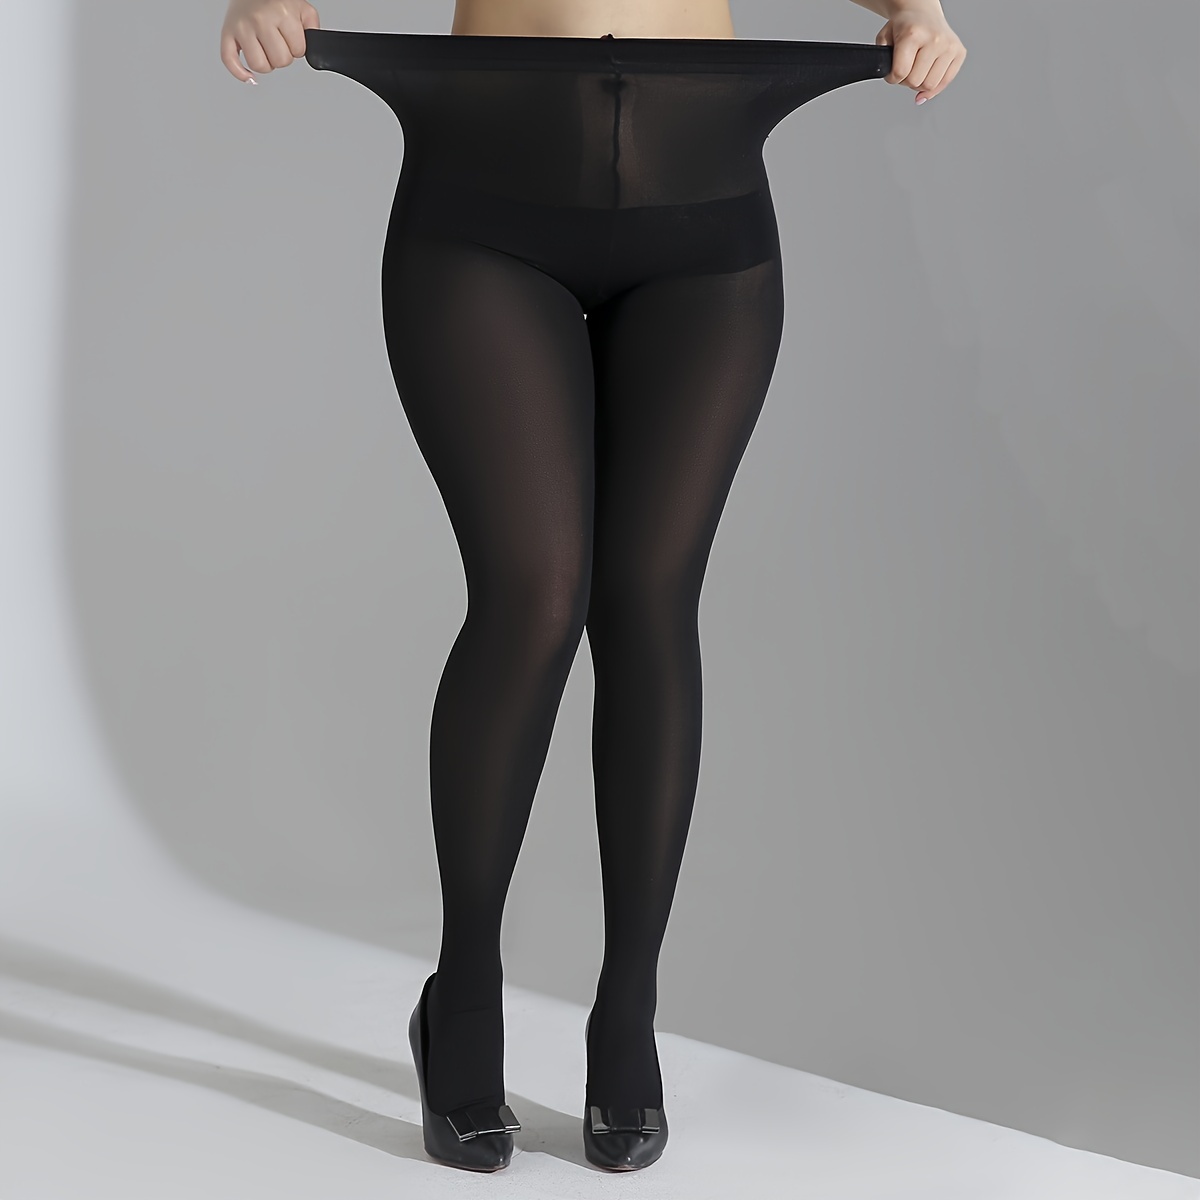 PLUS SIZE Women Top Quality Comfy Black Colour Tights Stockings Pantyhose  S-XXL